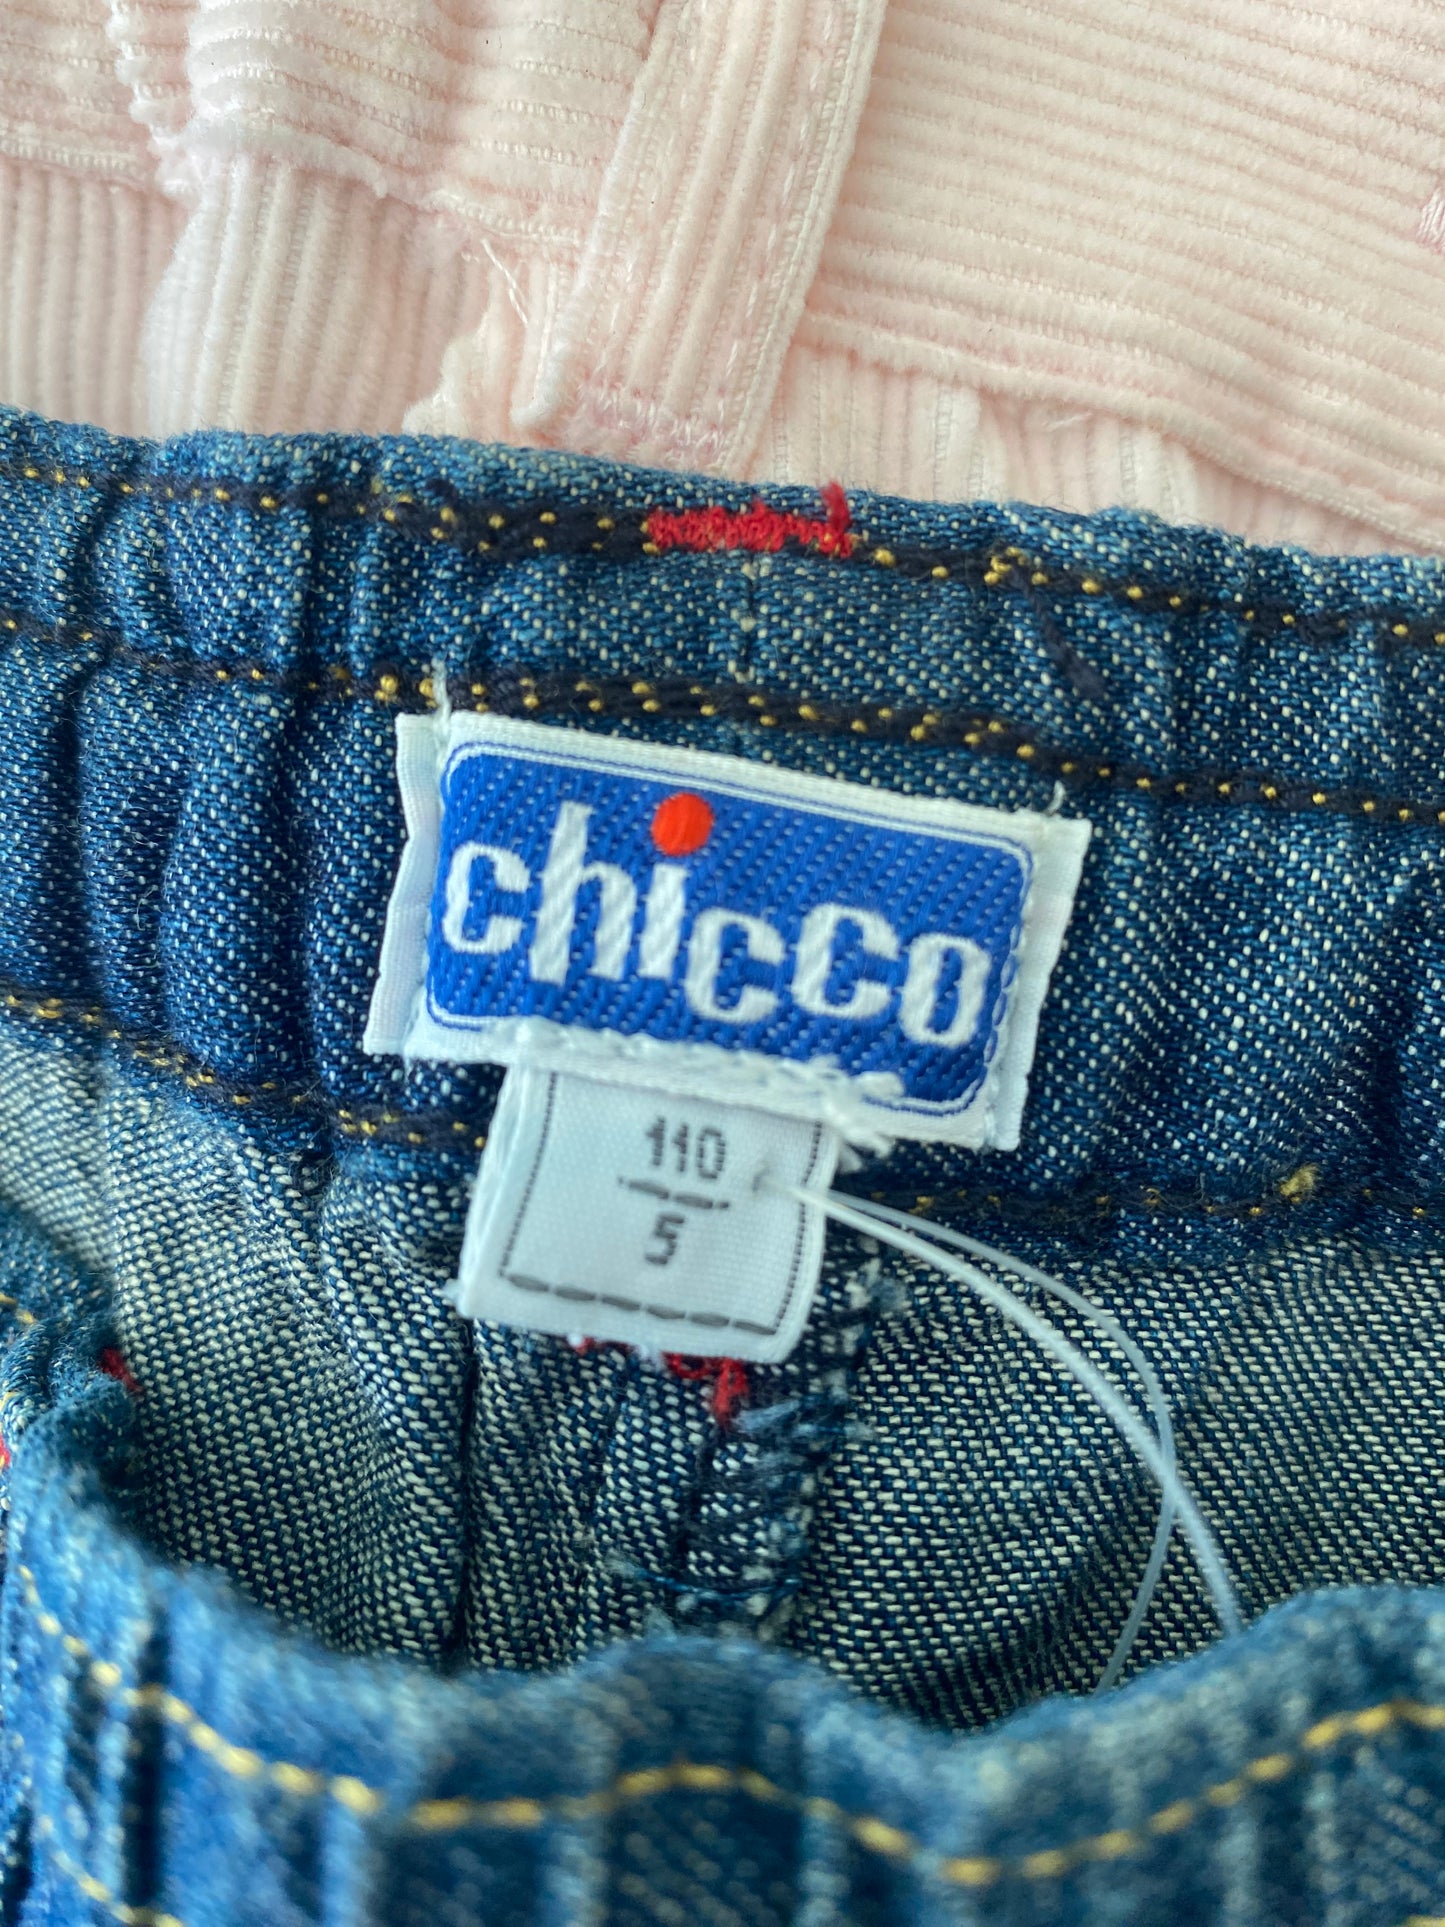 Jeans Chicco - 5 anni/ 110 cm